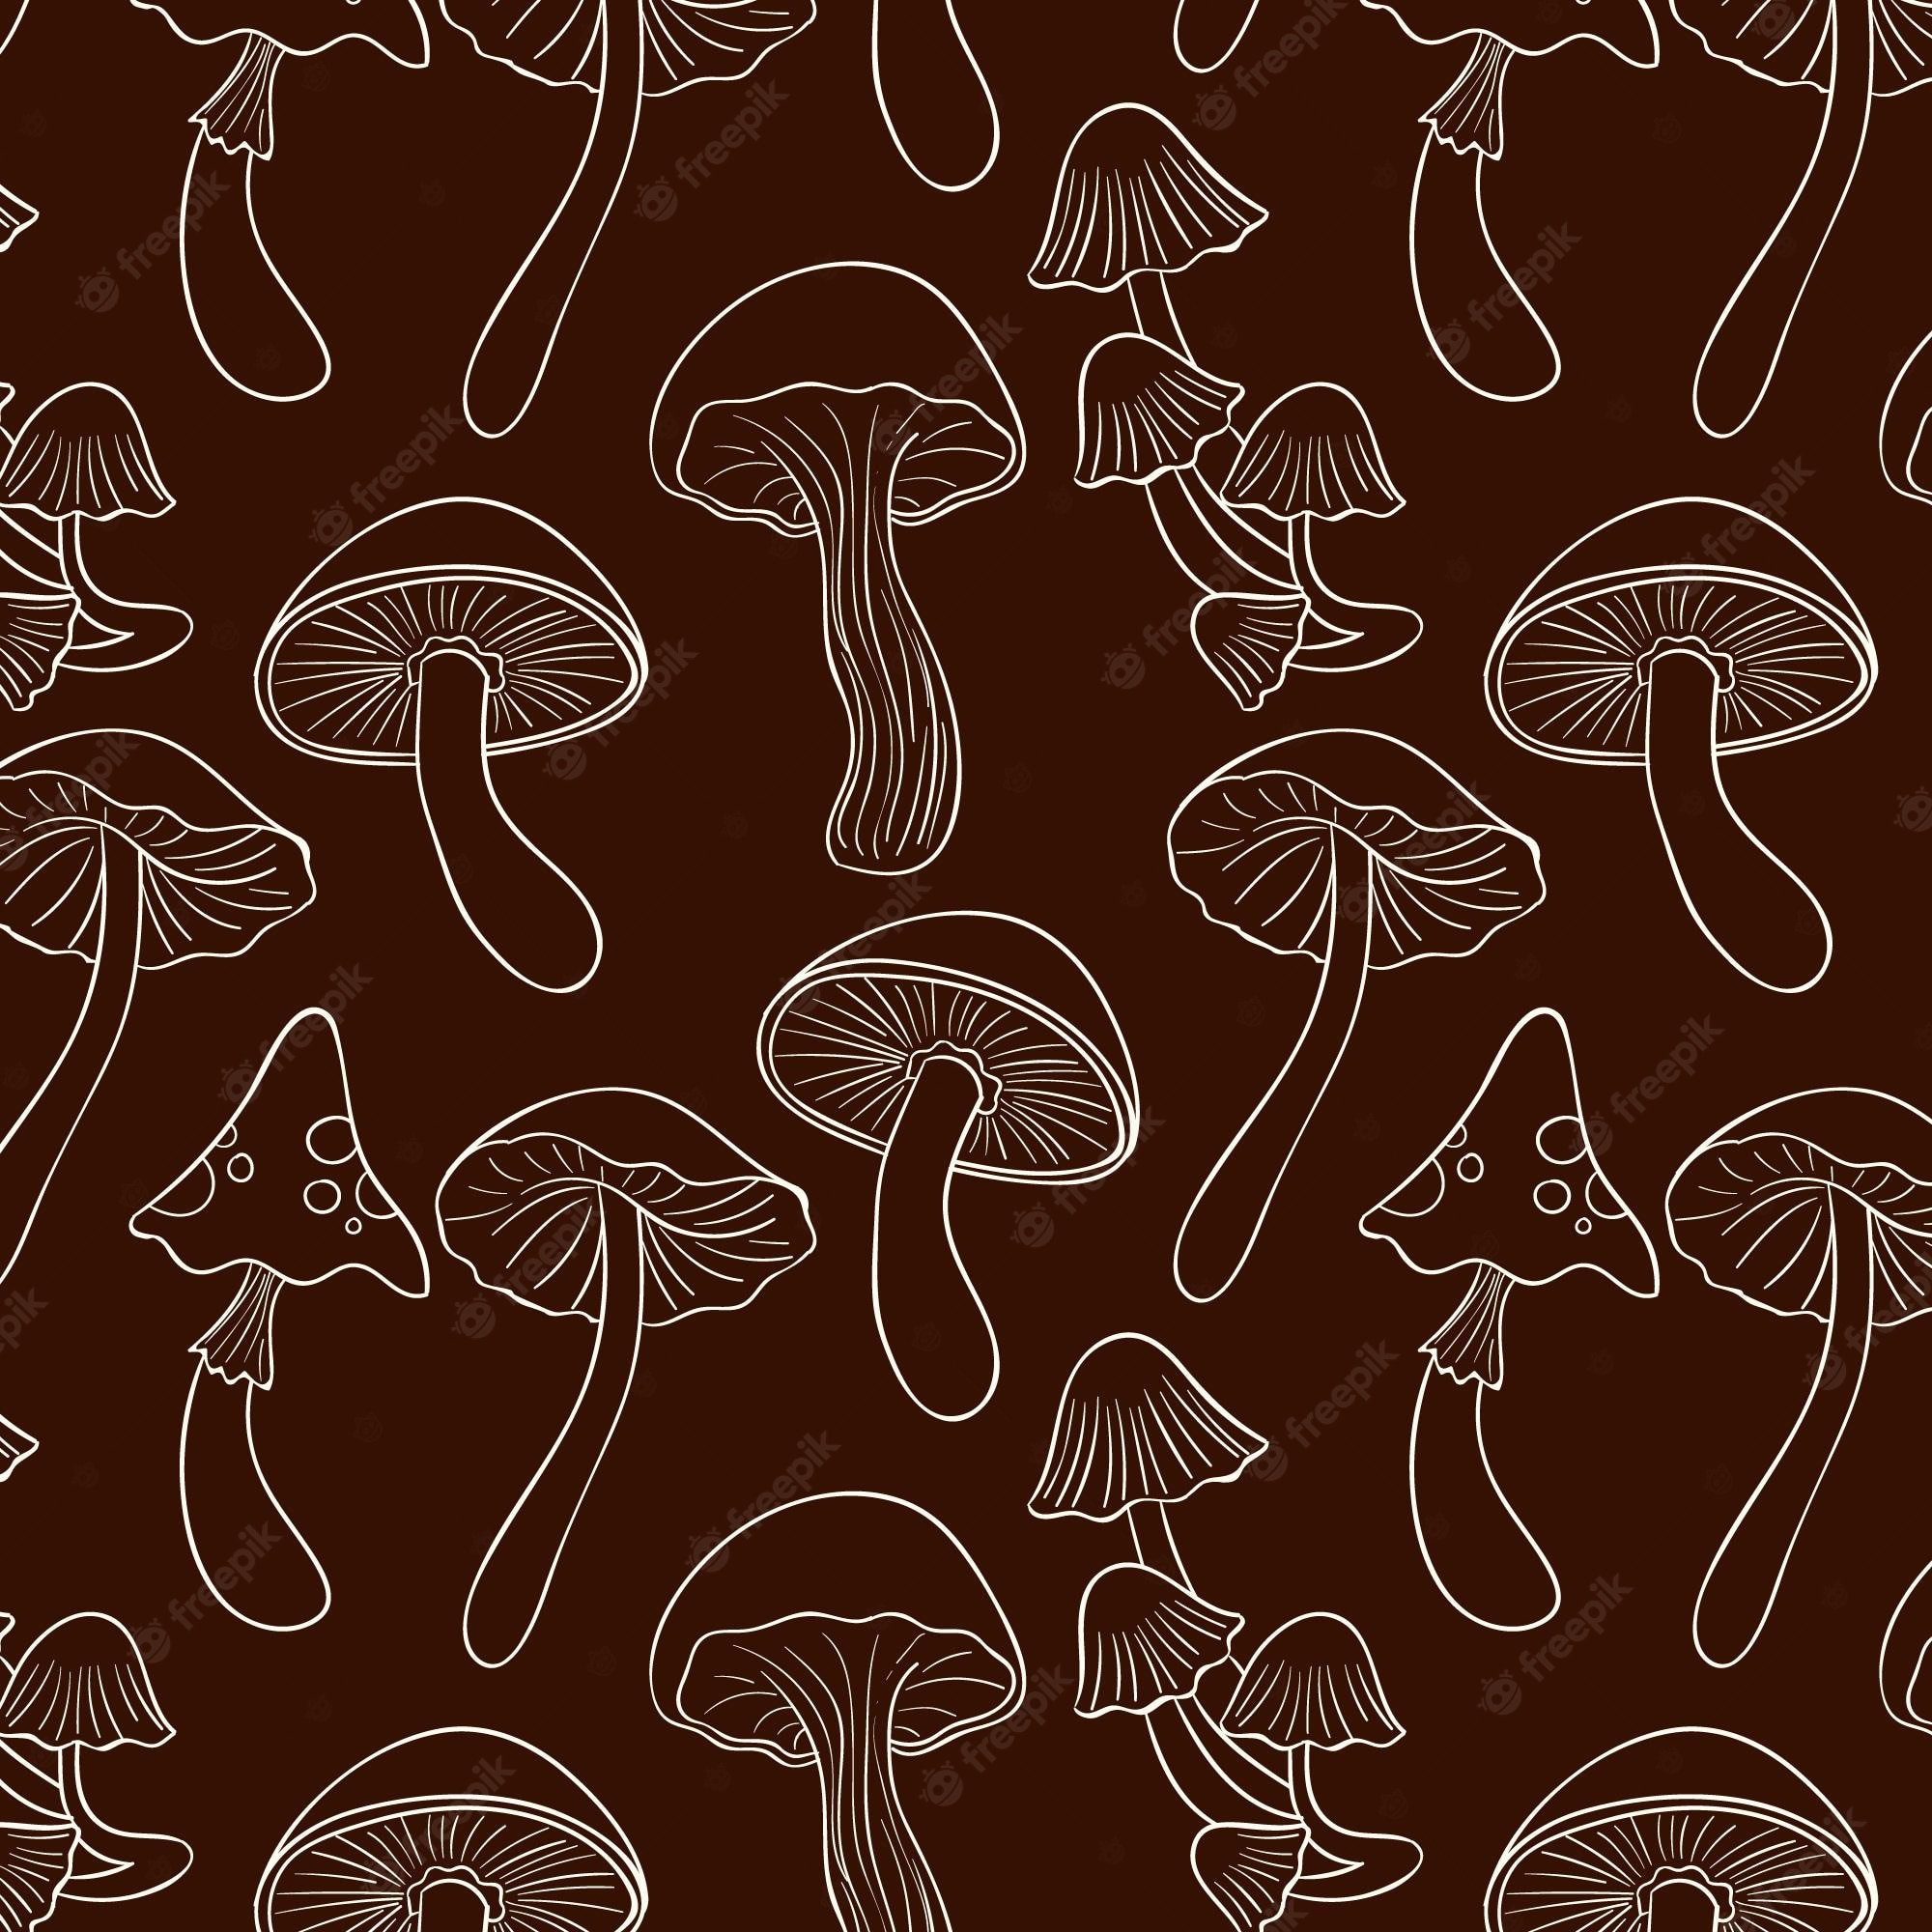 Mushroom phone wallpaper cute food  Free Photo  rawpixel